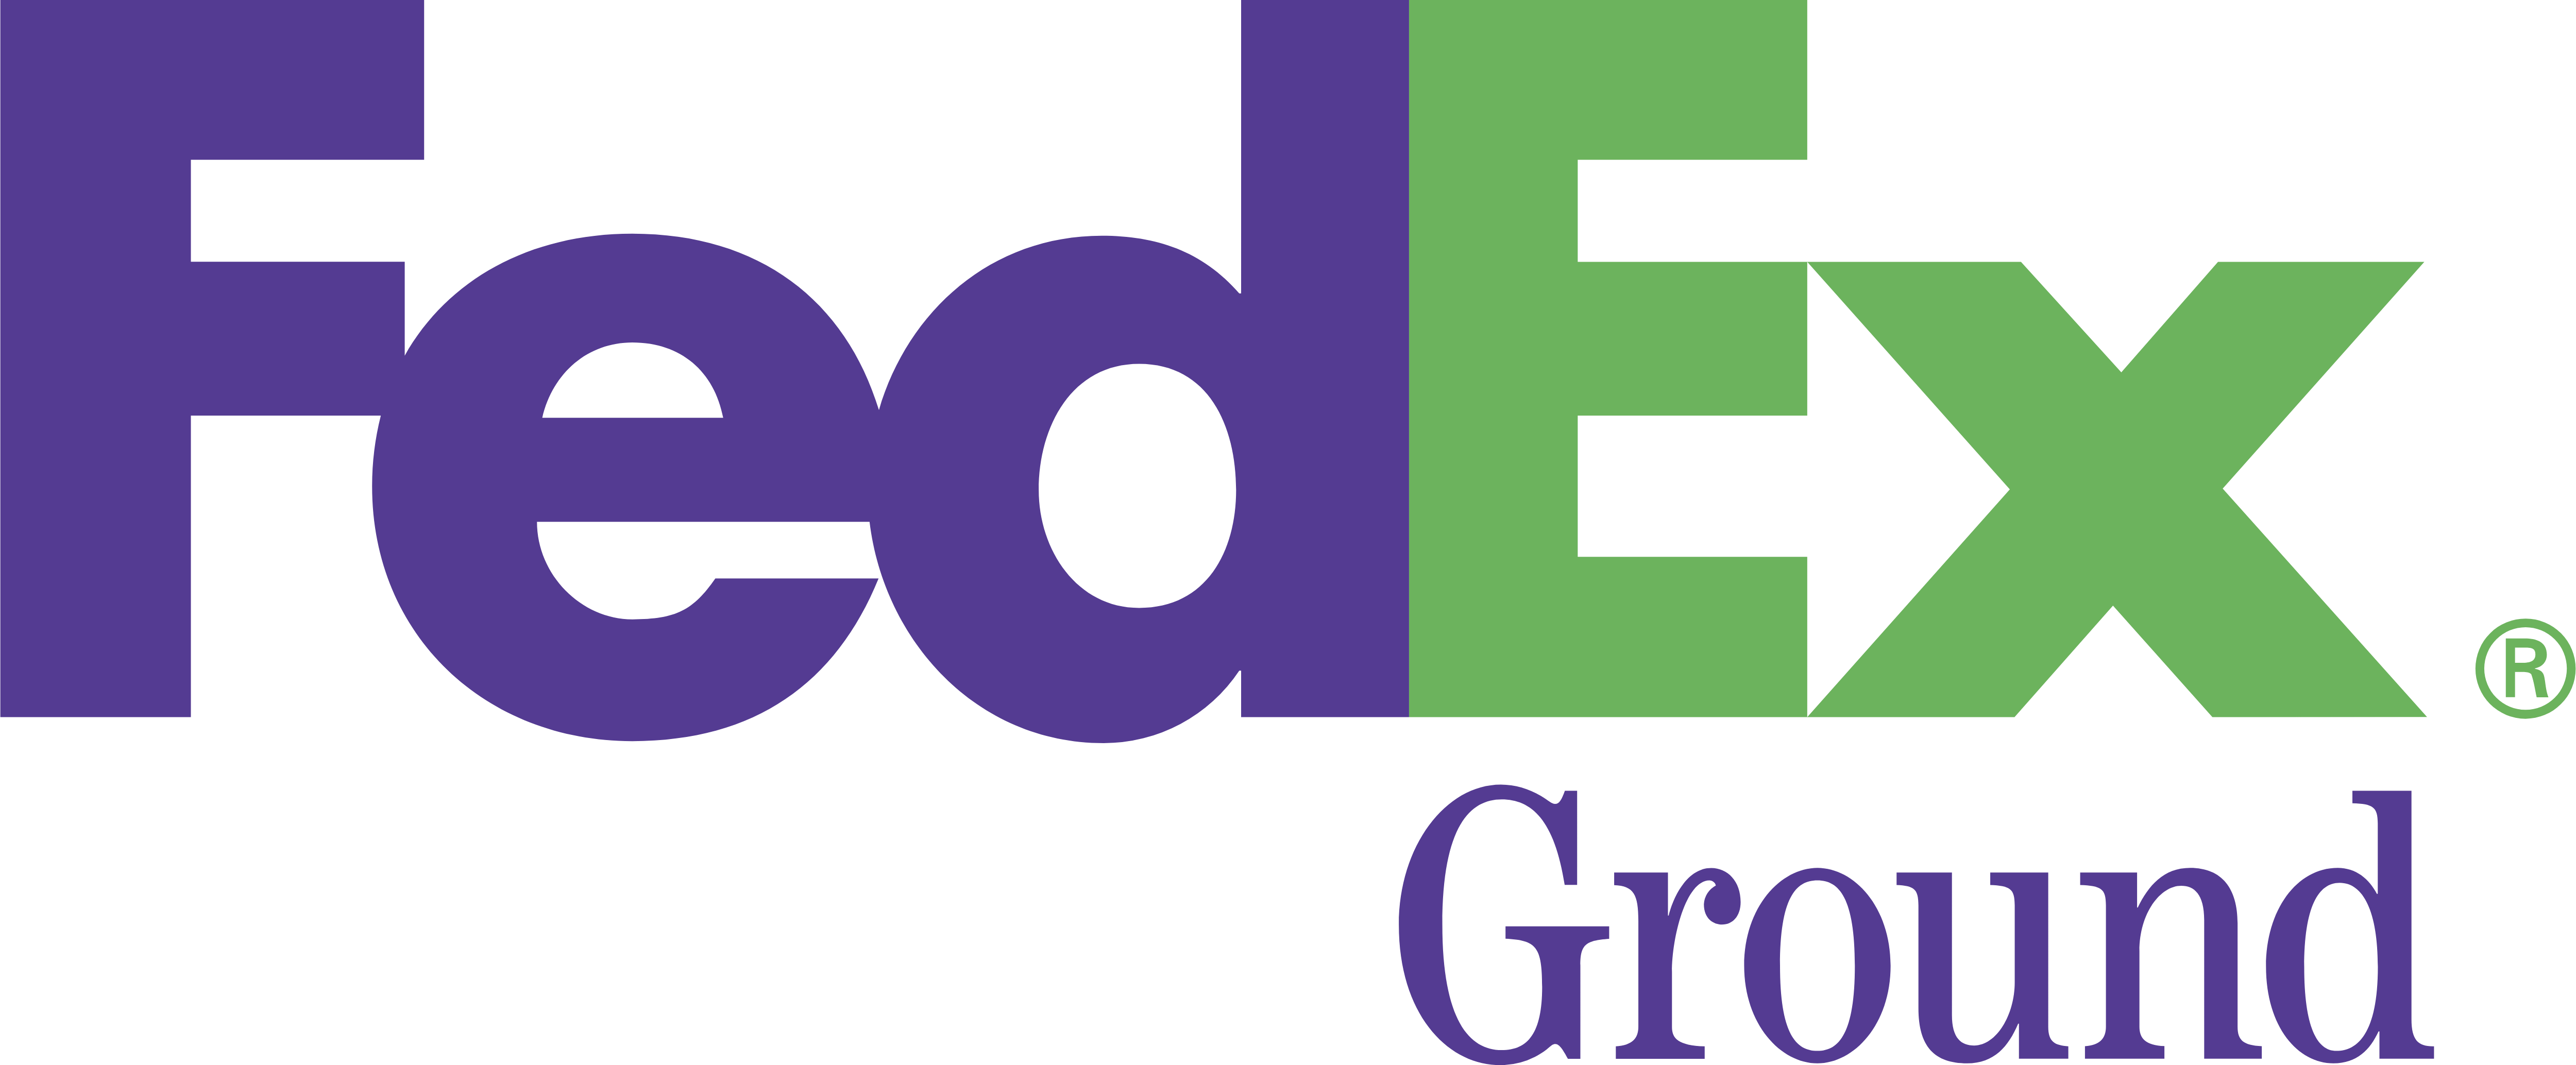 Large FedEx Logo - FedEx – Logos Download